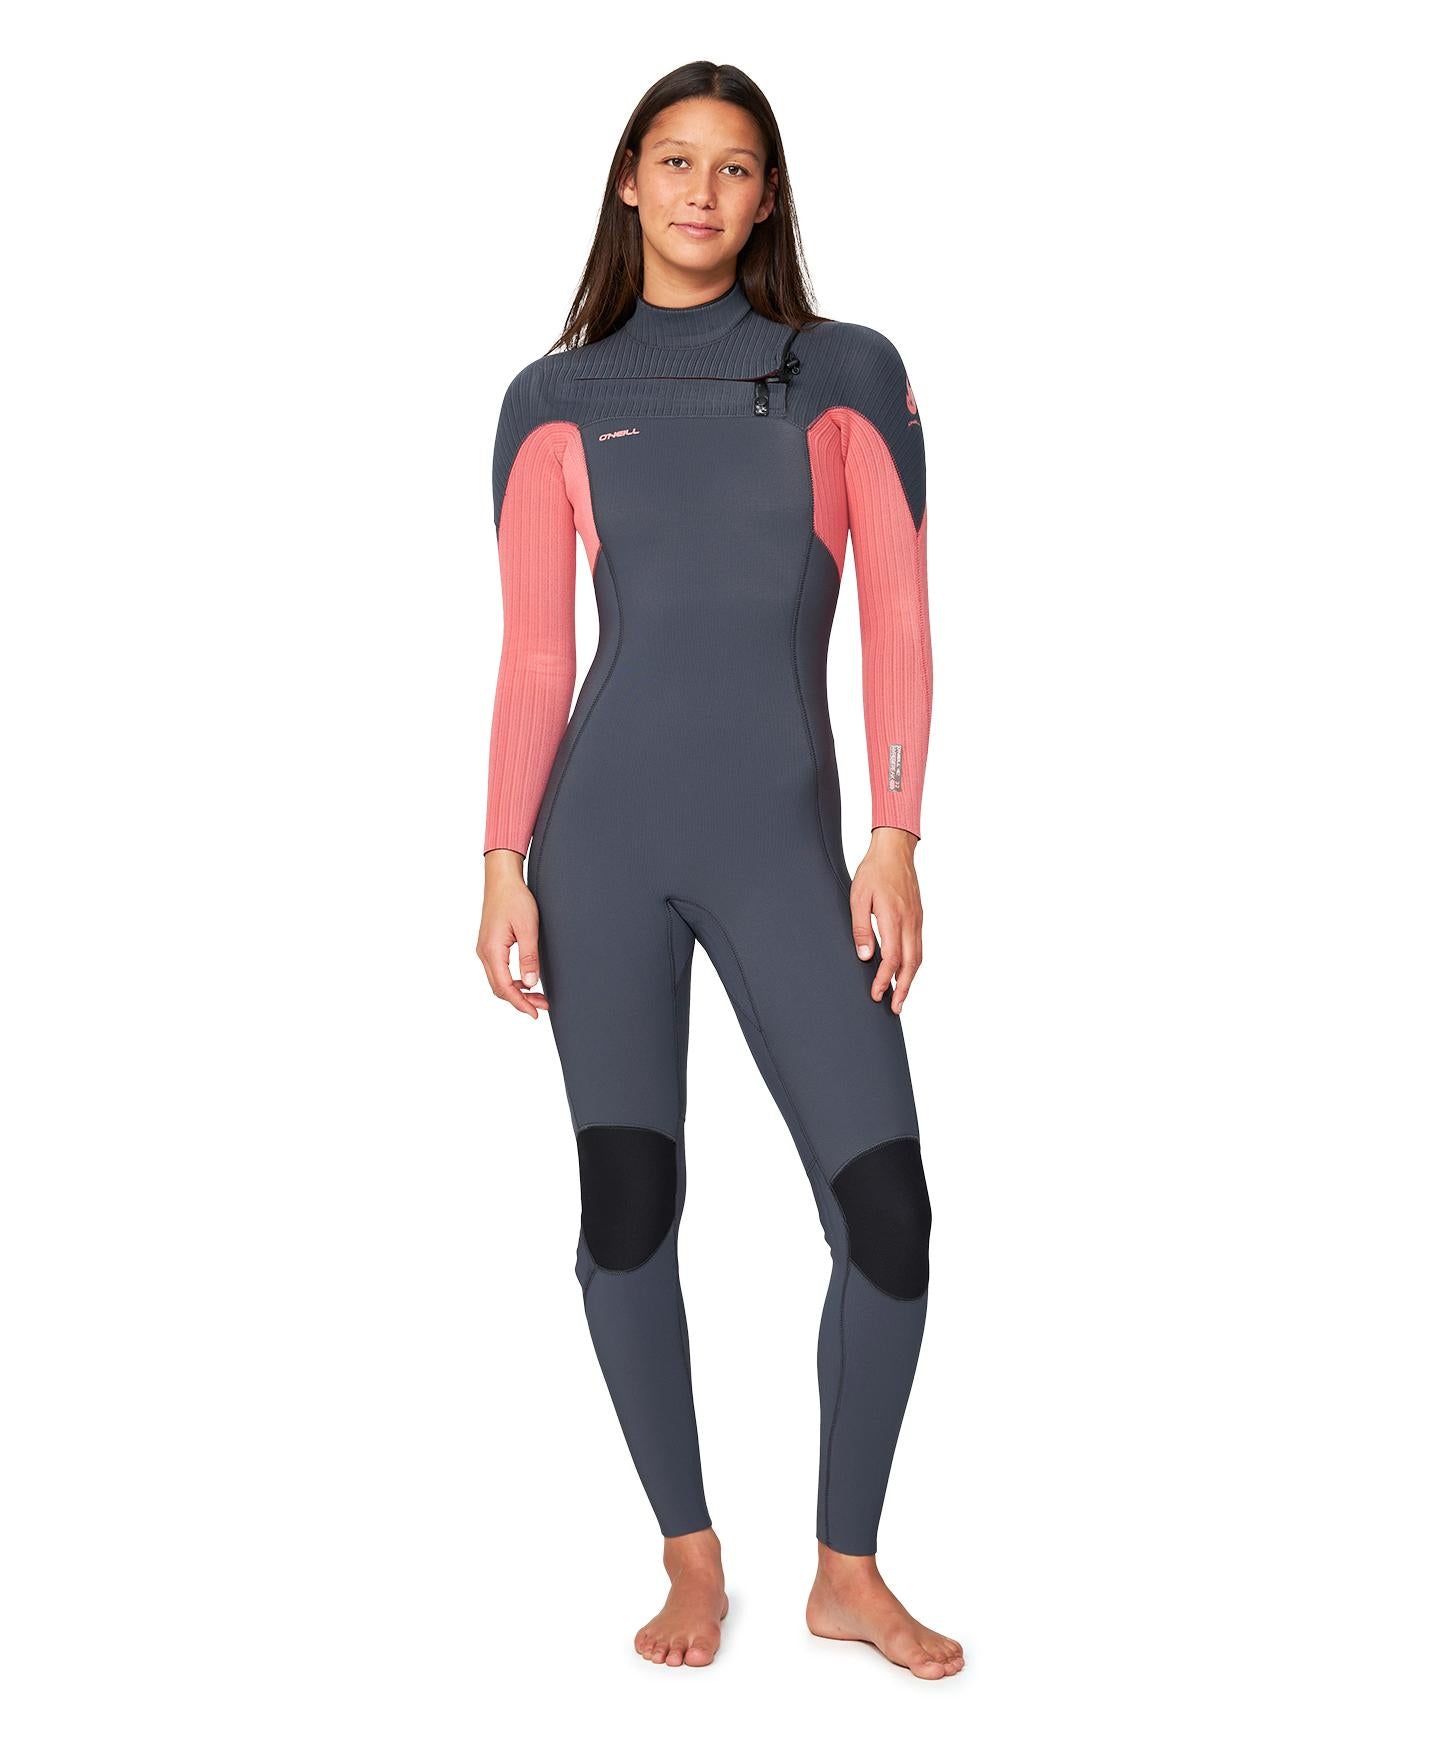 Women's HyperFire 4/3mm Steamer Chest Zip Wetsuit - Coral